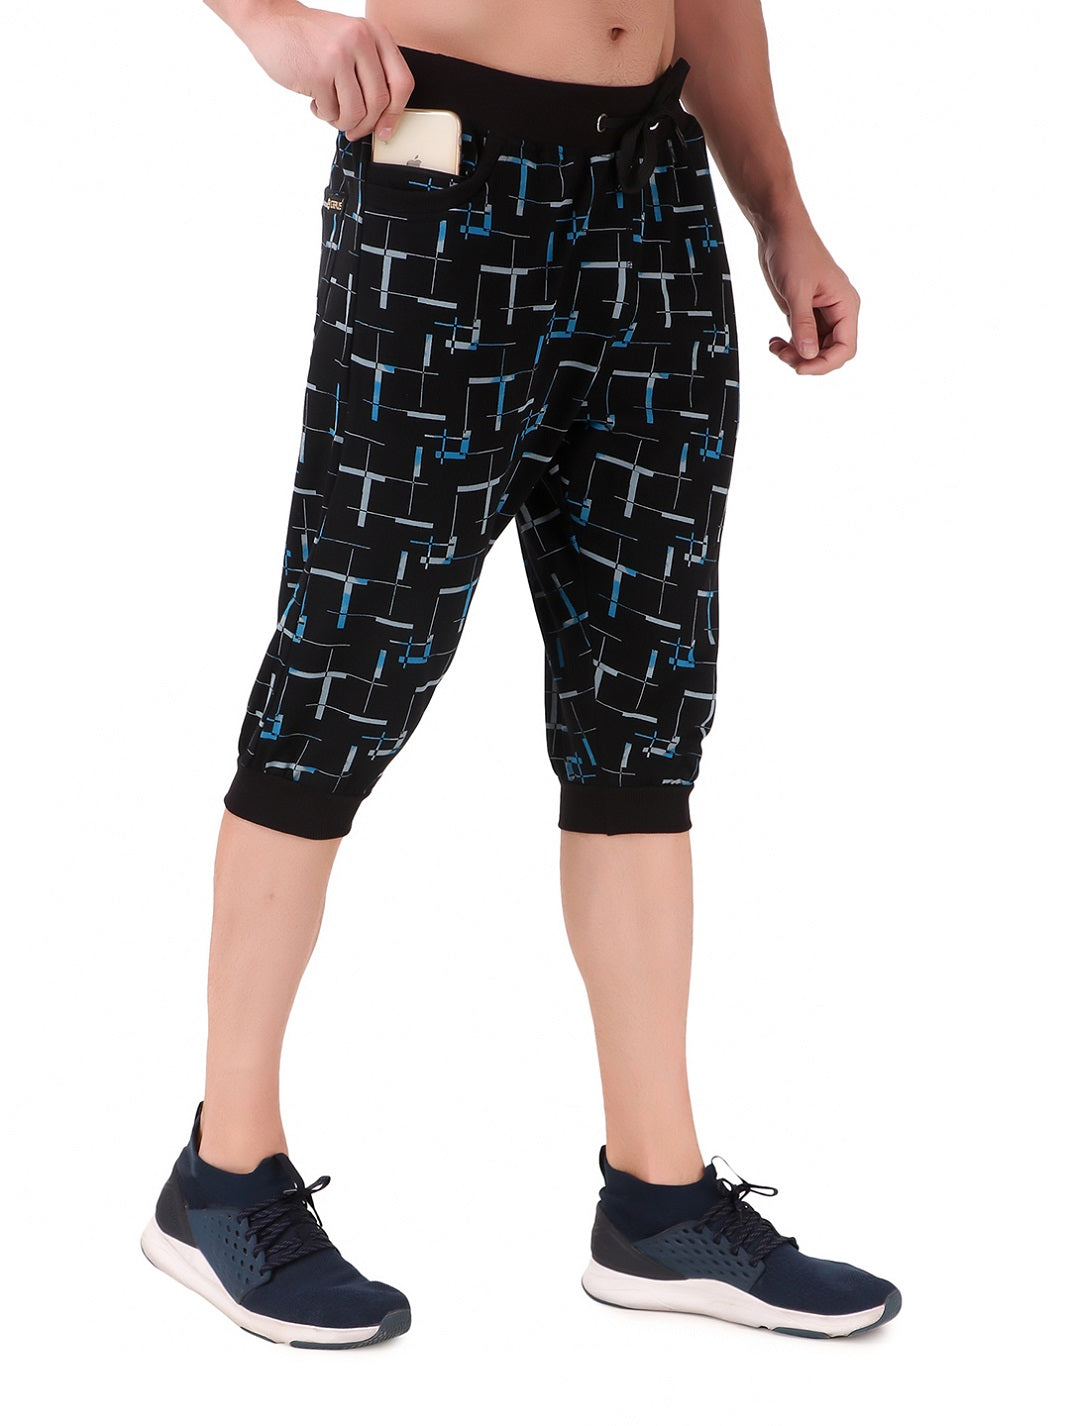 Buy Khaki Shorts  34ths for Men by Teamspirit Online  Ajiocom